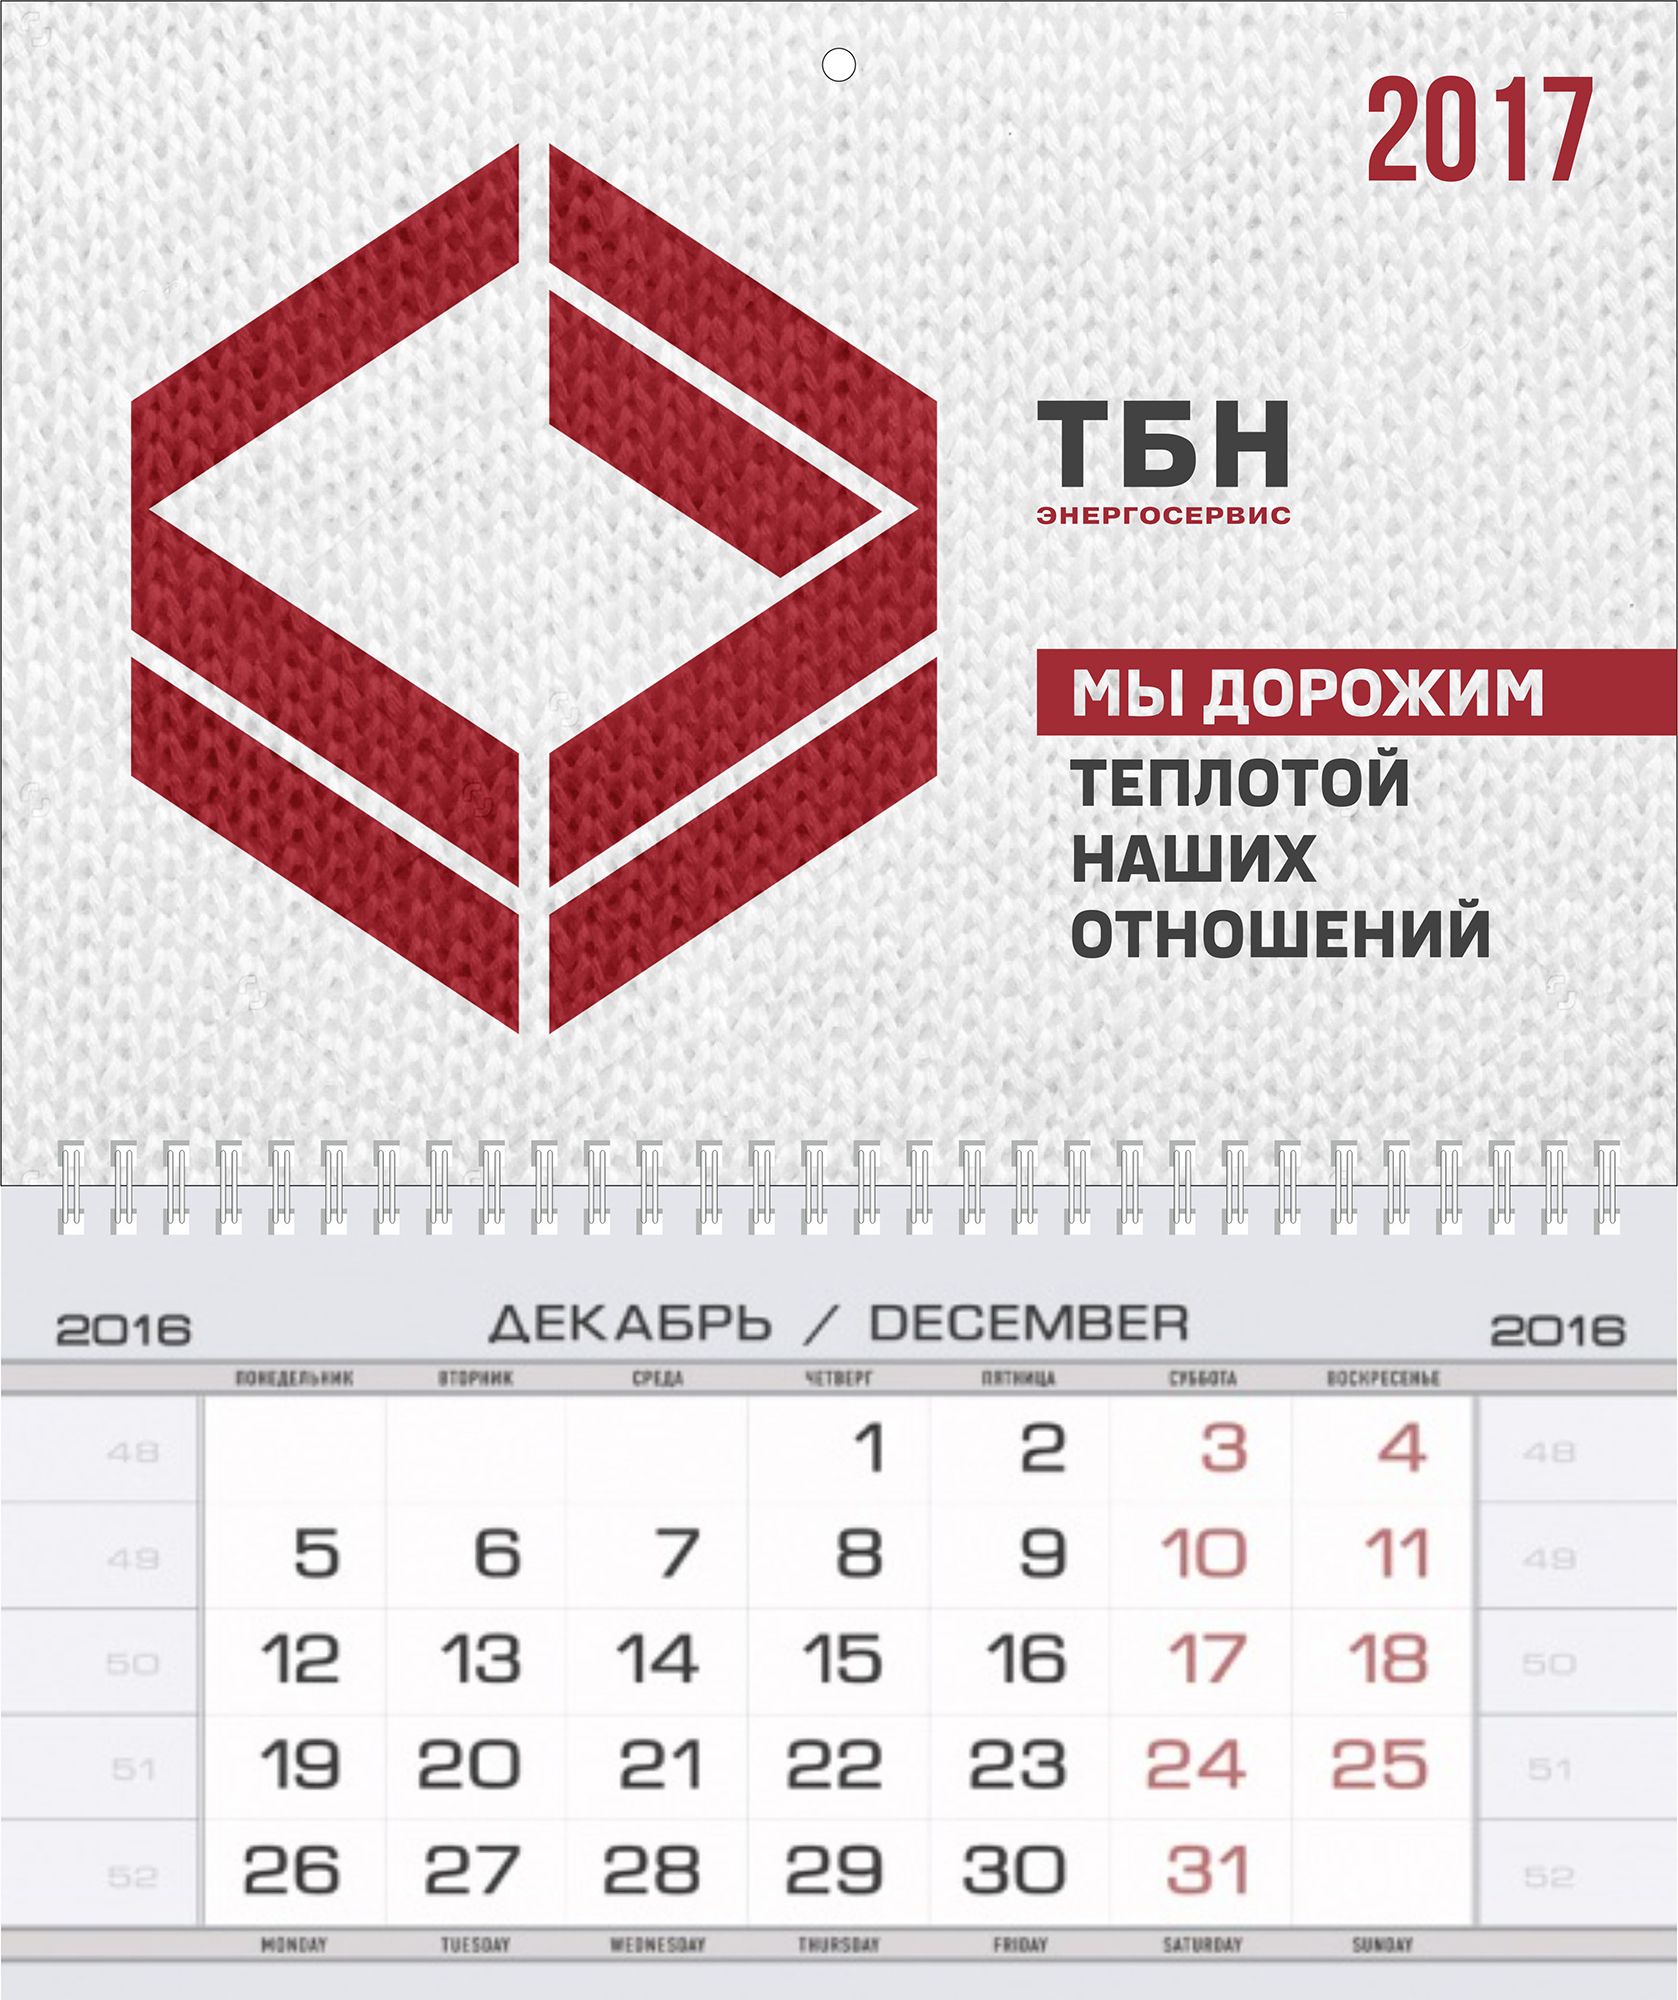 Дизайн квартального календаря (топпер). - дизайнер LiebeMarina